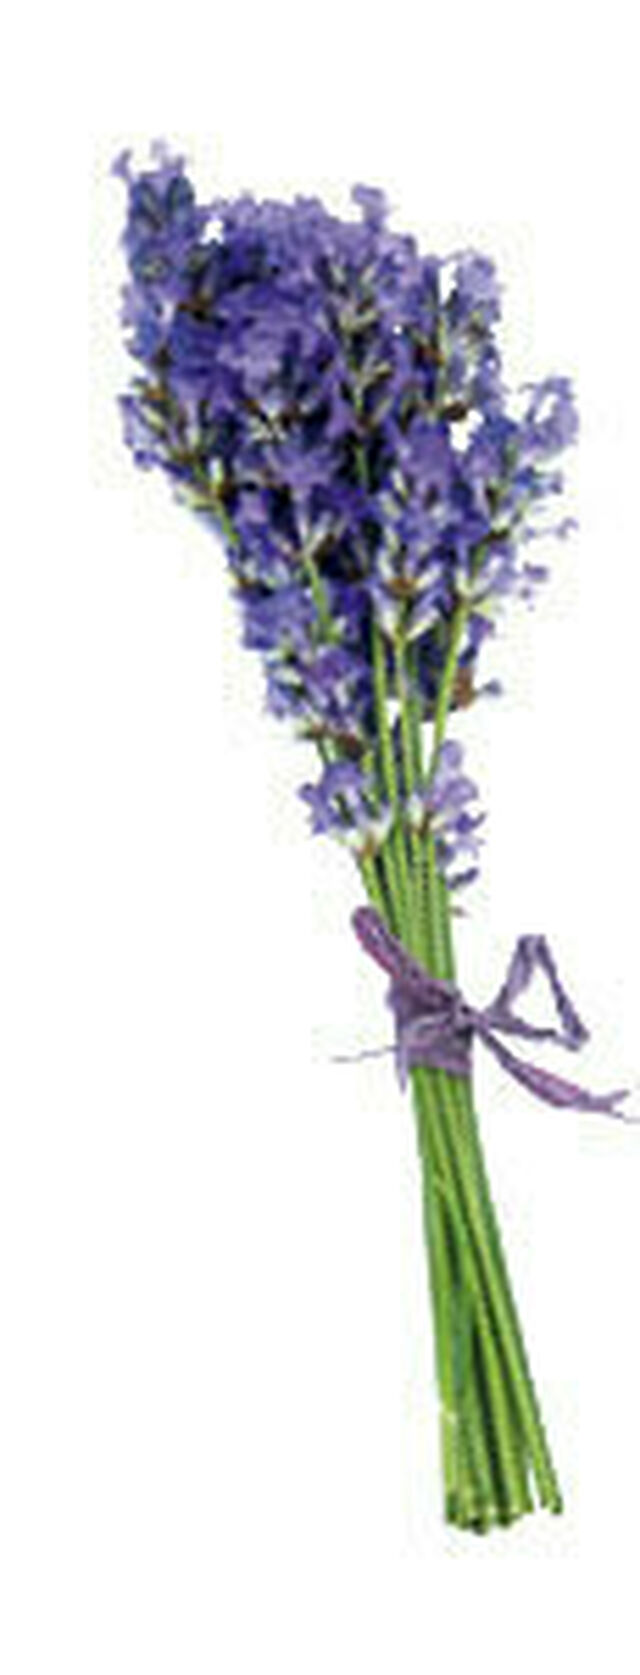 Lavendel (Foto: gettyimages/Rosemary Calvert)